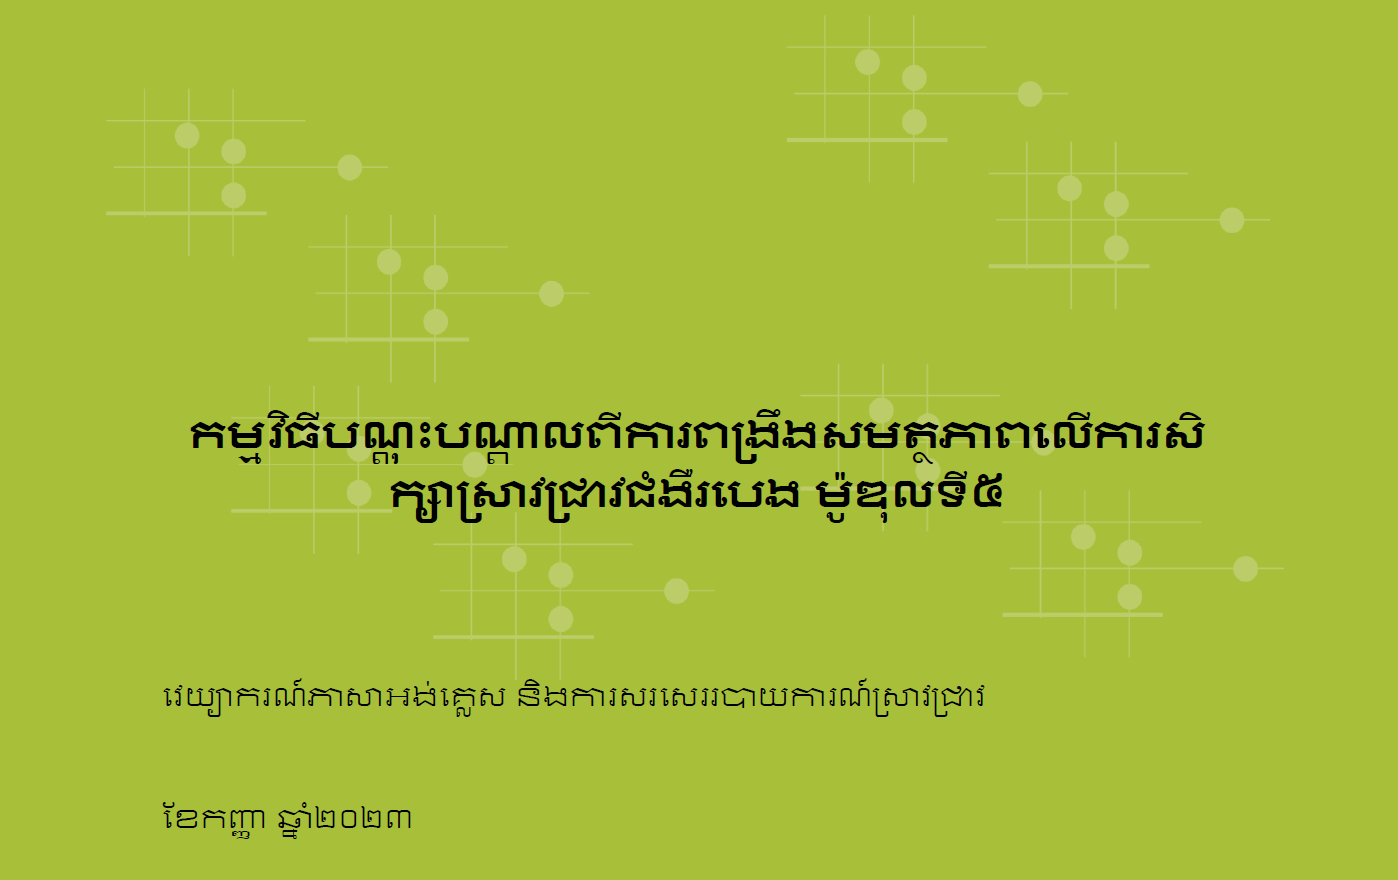 Curriculum for Module 5 (Khmer)